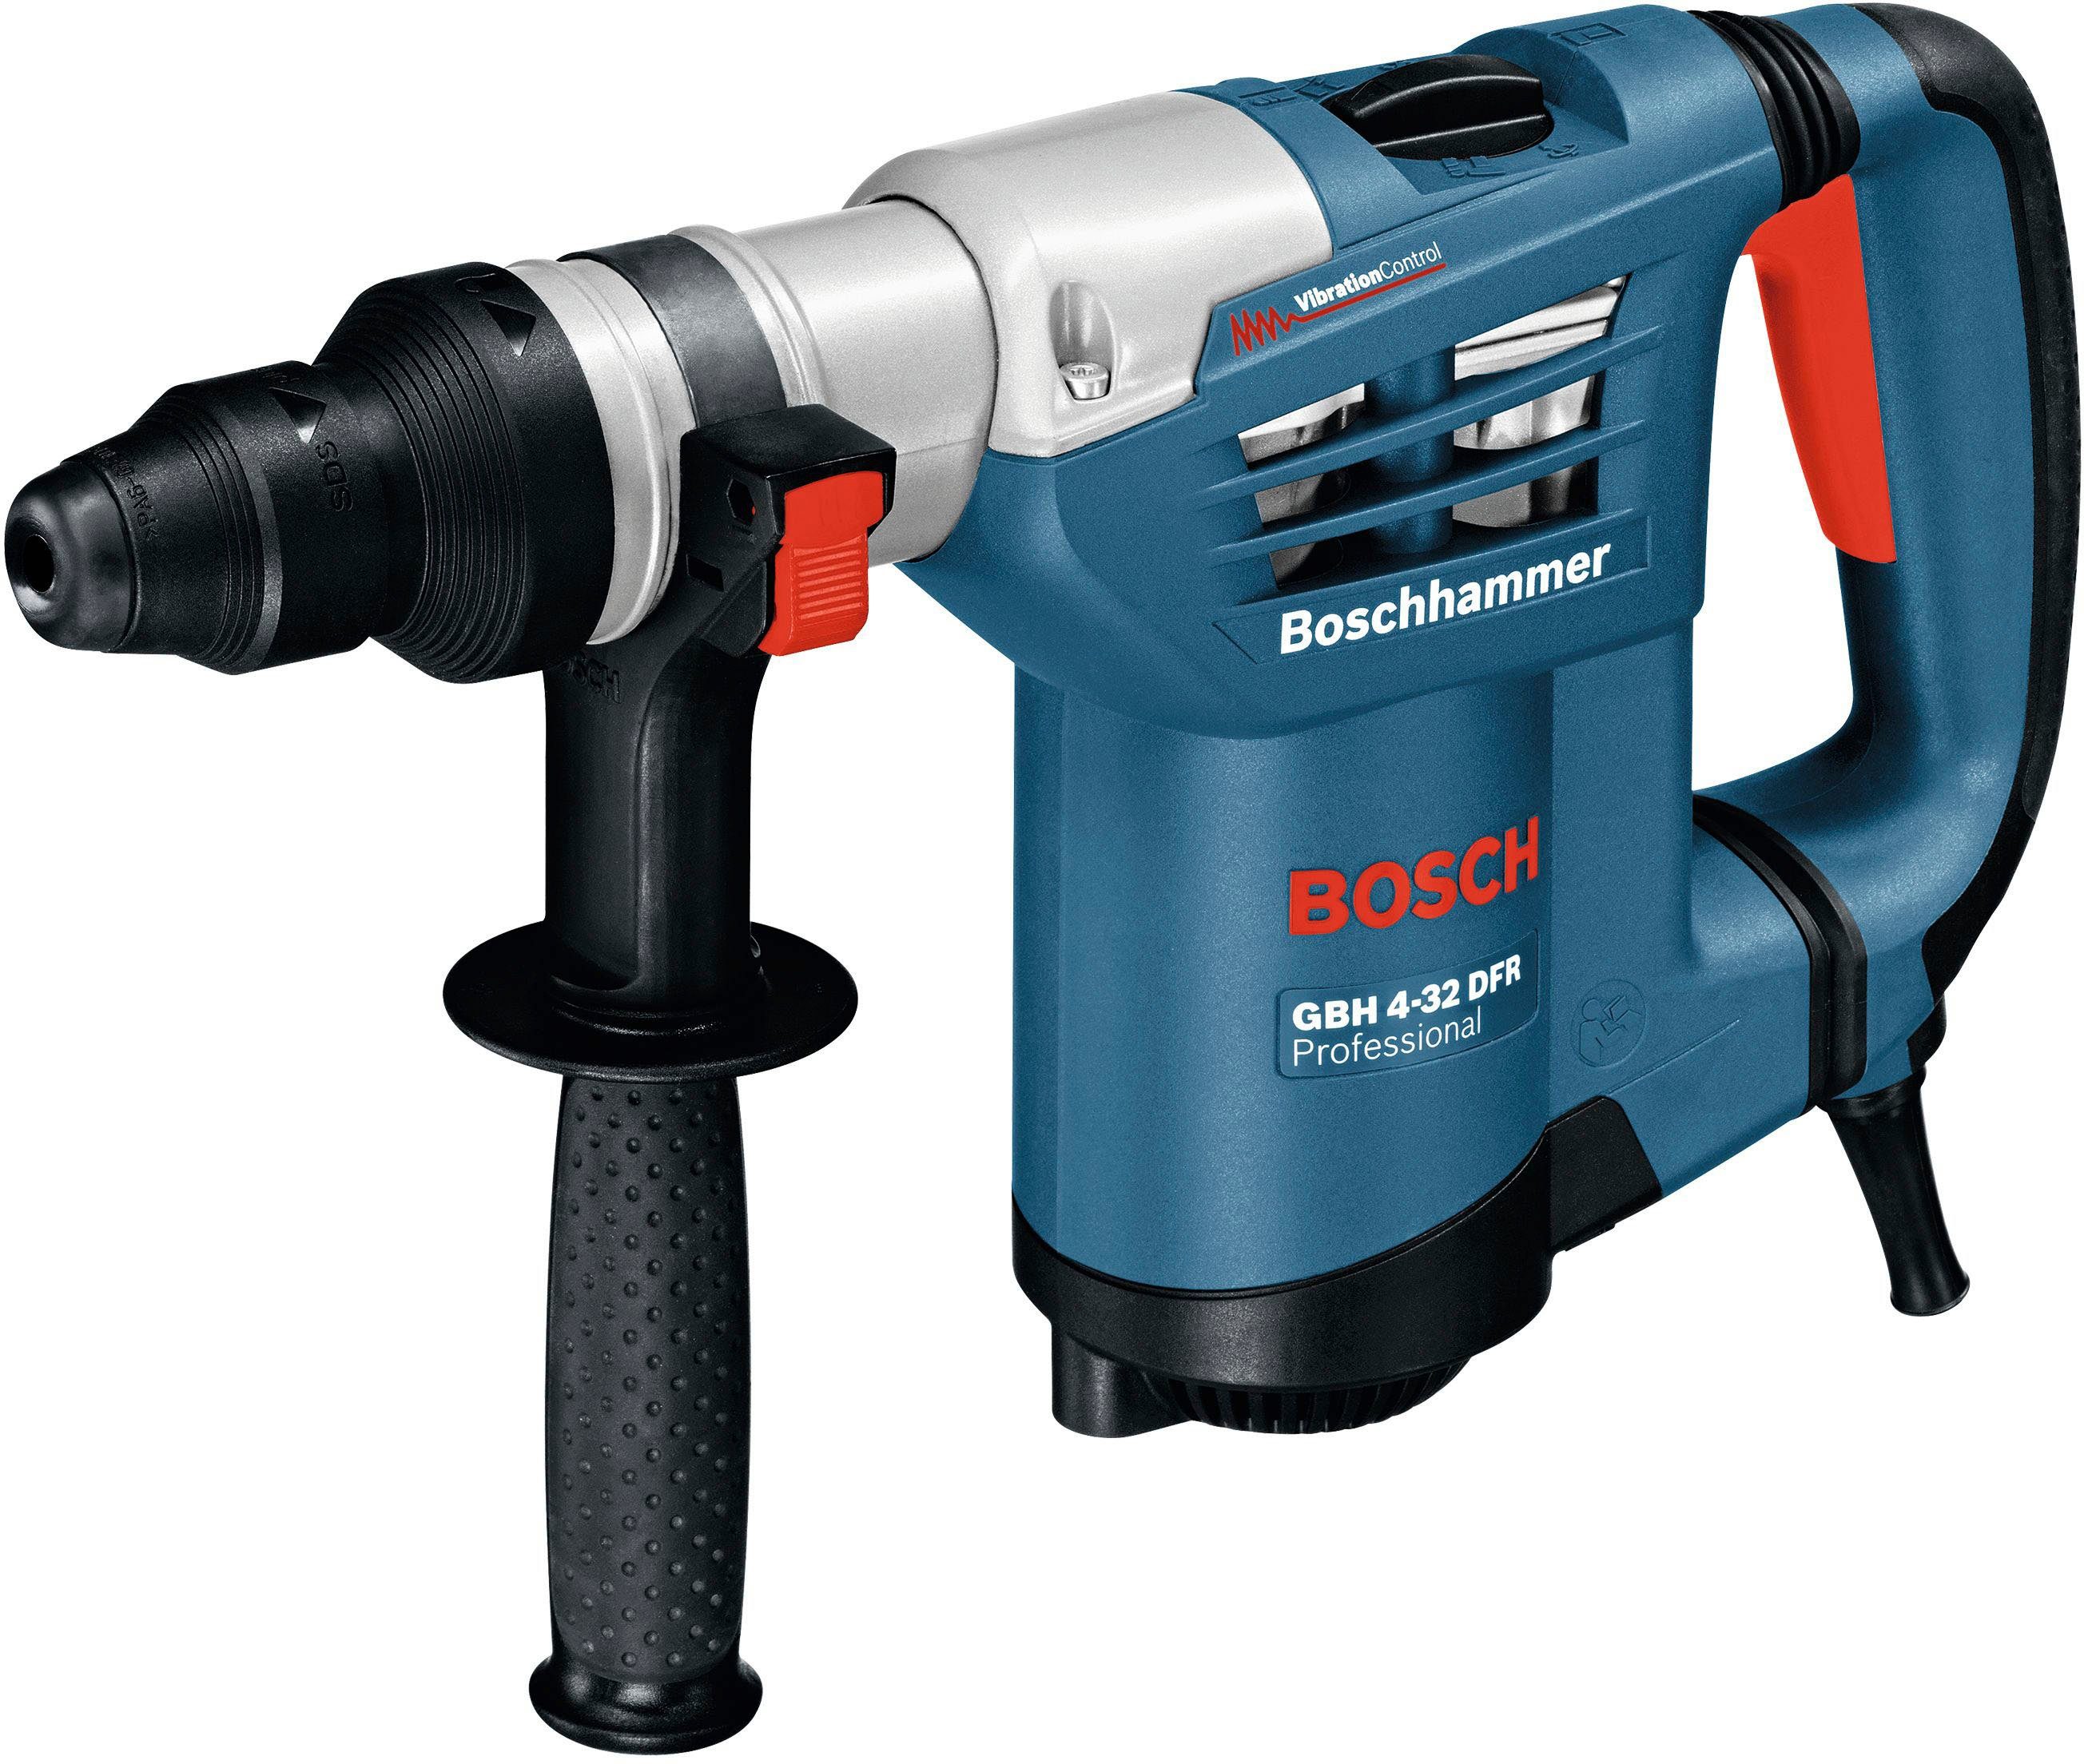 780 max. GBH DFR, Bosch U/min, Bohrhammer Professional 4-32 (Set)